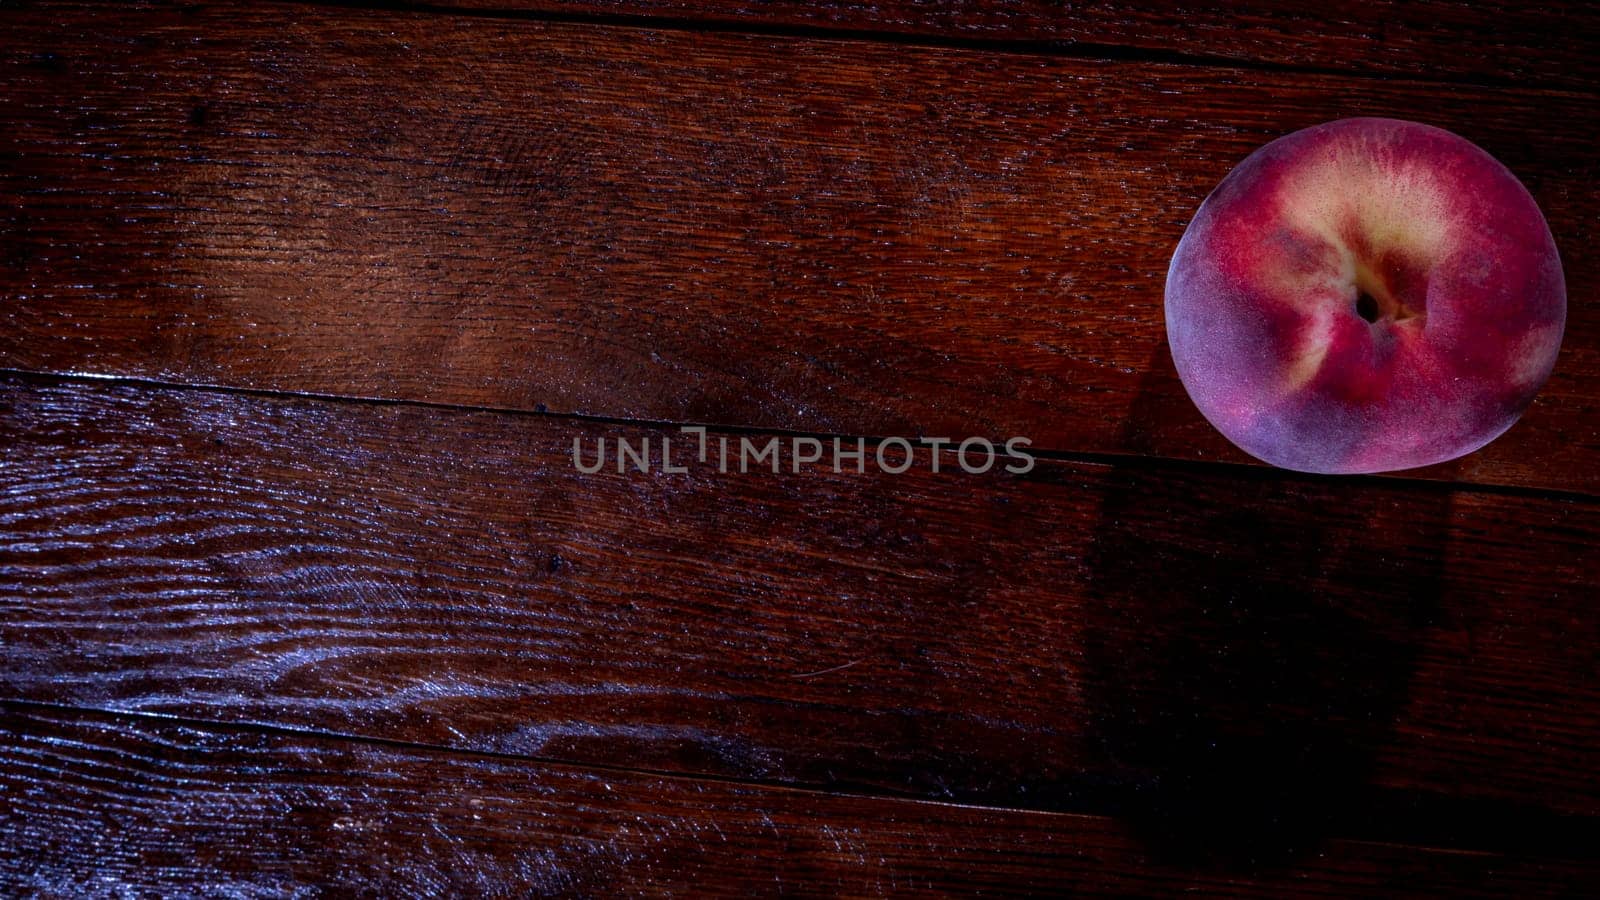 Fresh juicy peaches on rustic wooden table by vladispas